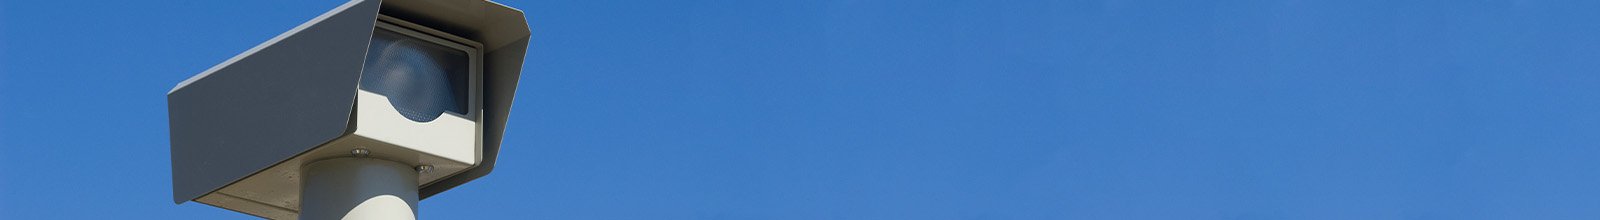 Speed camera against a blue sky